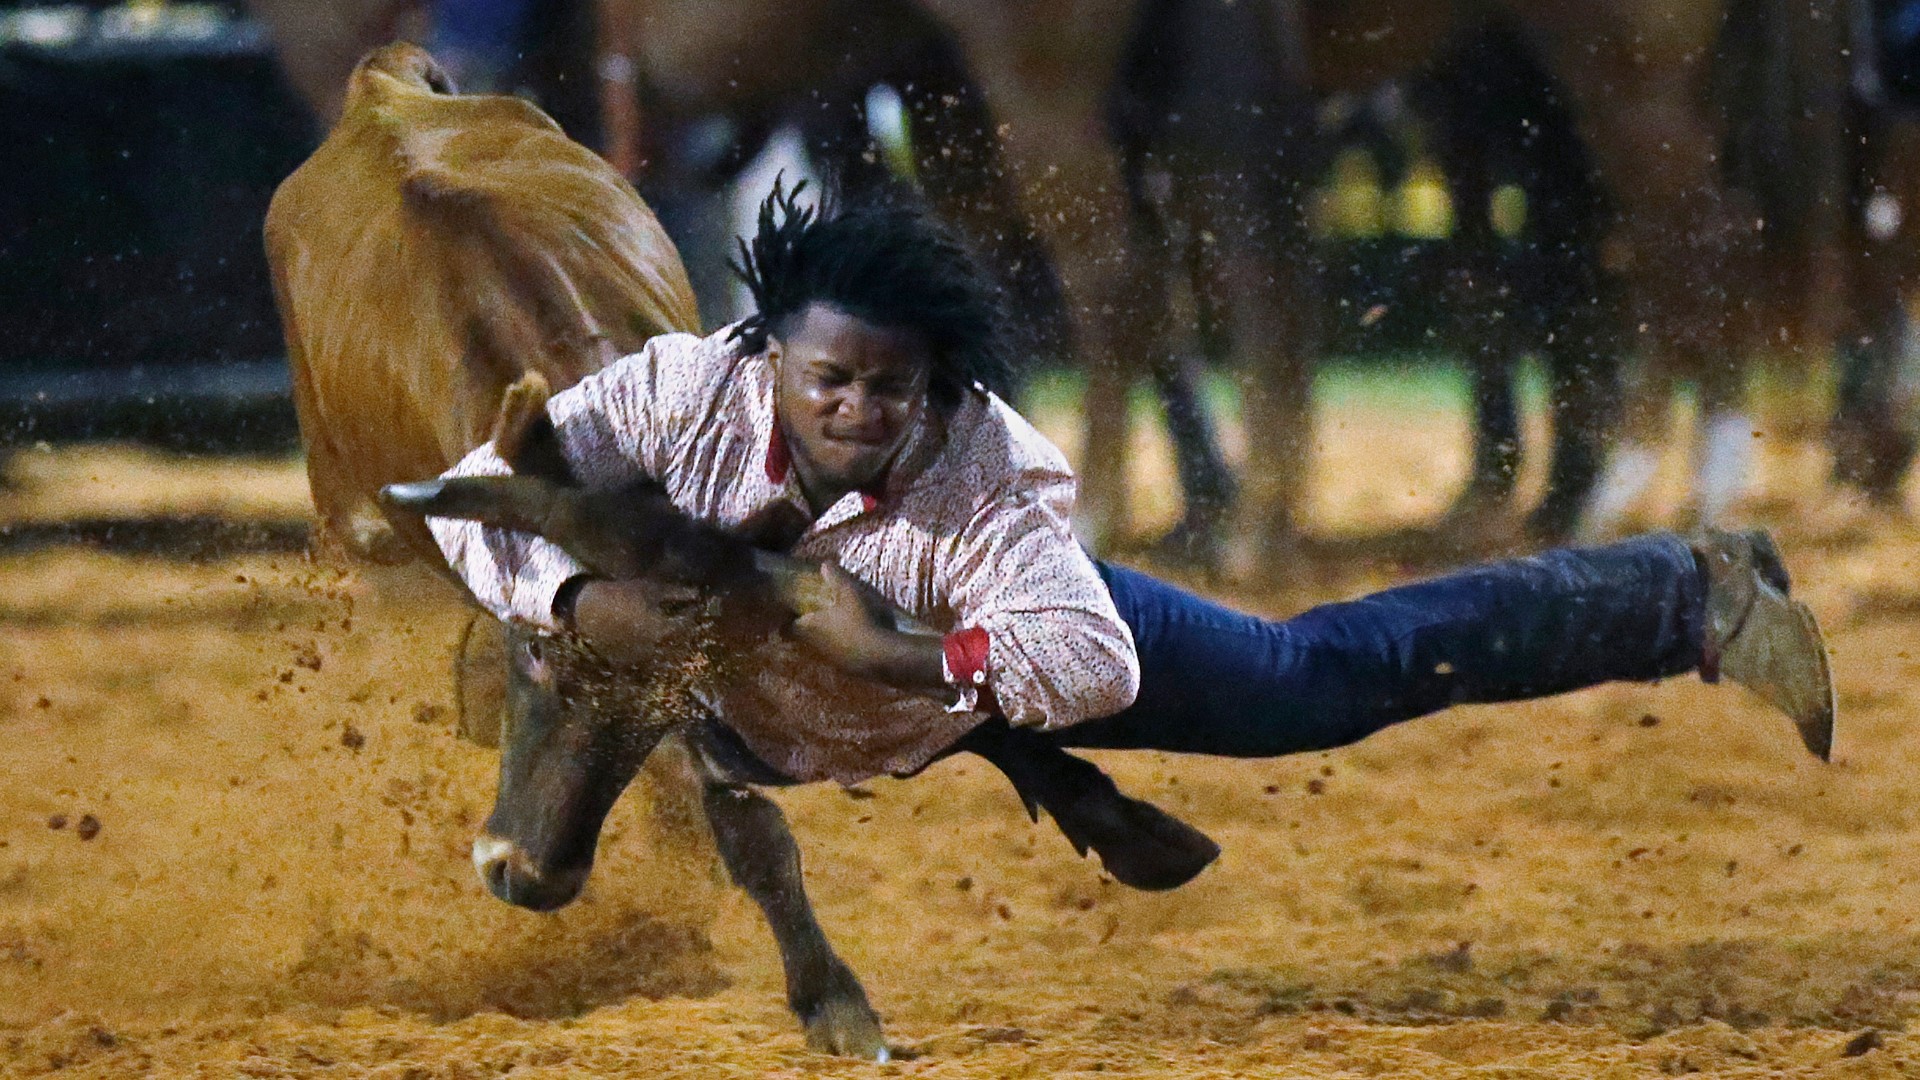 Oklahoma Black rodeo, longestrunning in US, rides despite virus